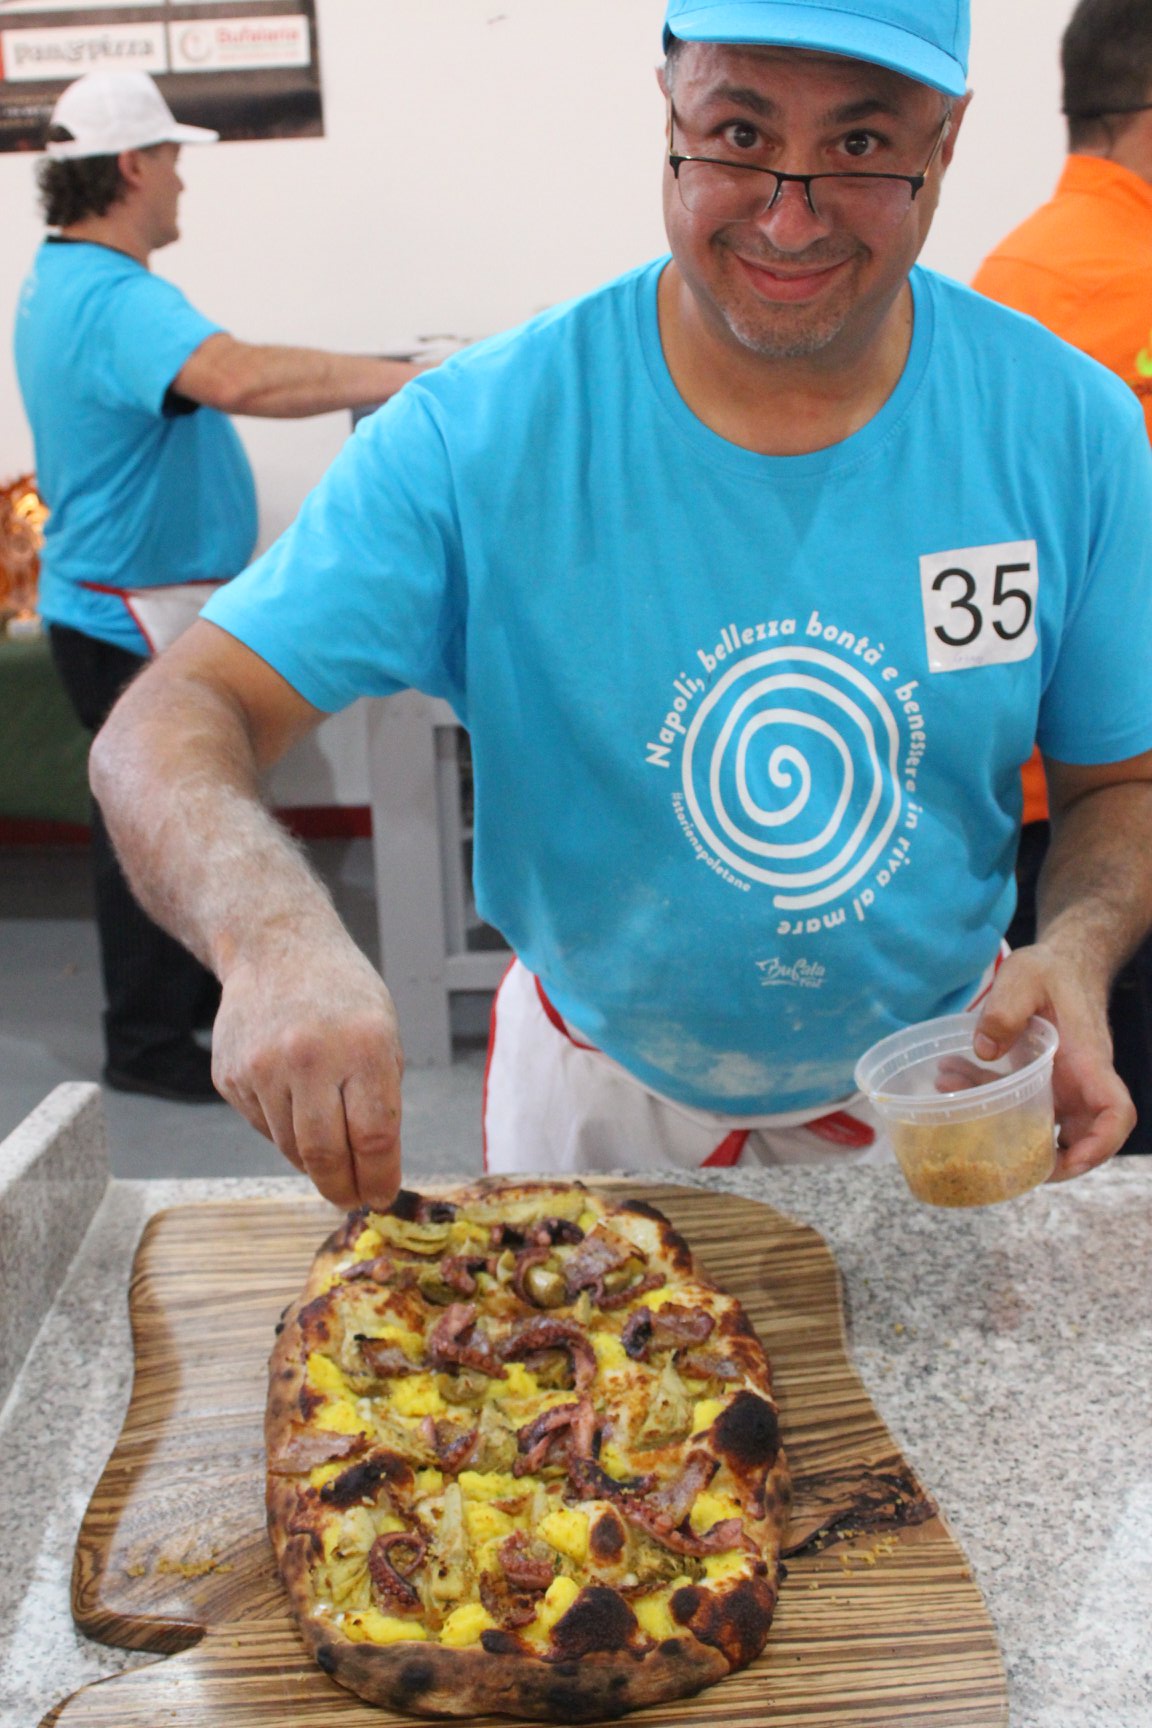 Gino Rago competing at the Spanish Pizza Championship